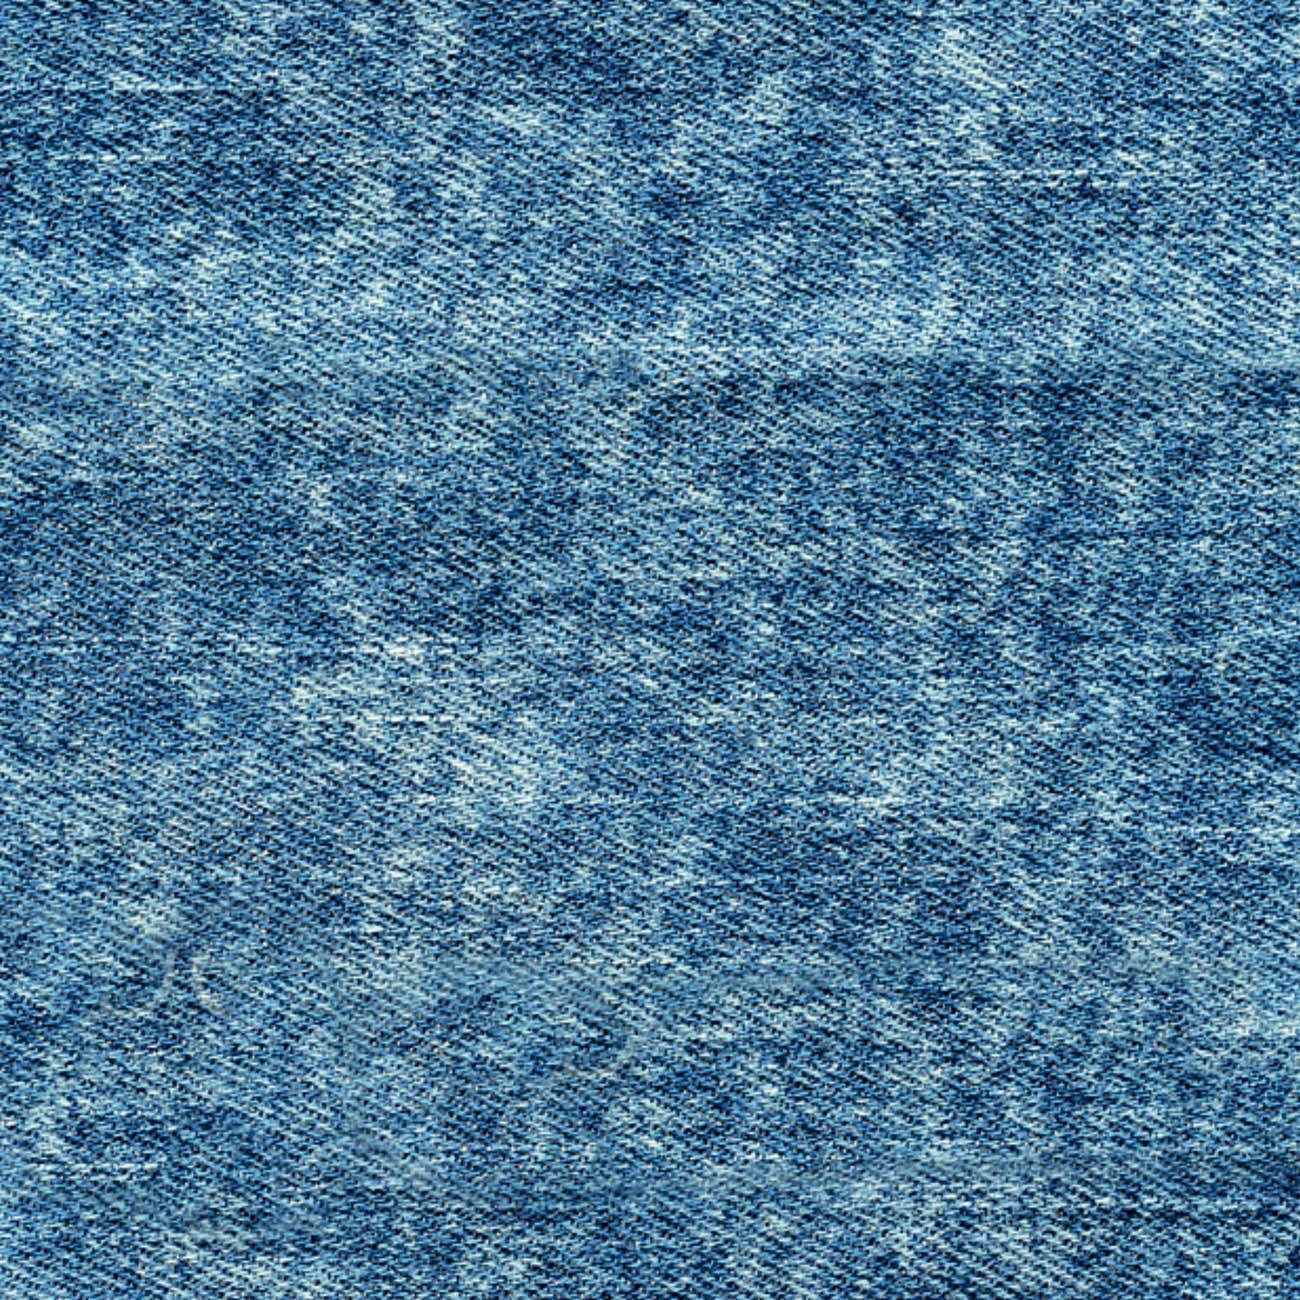 PRZECIERANY JEANS (Atlantic Blue)